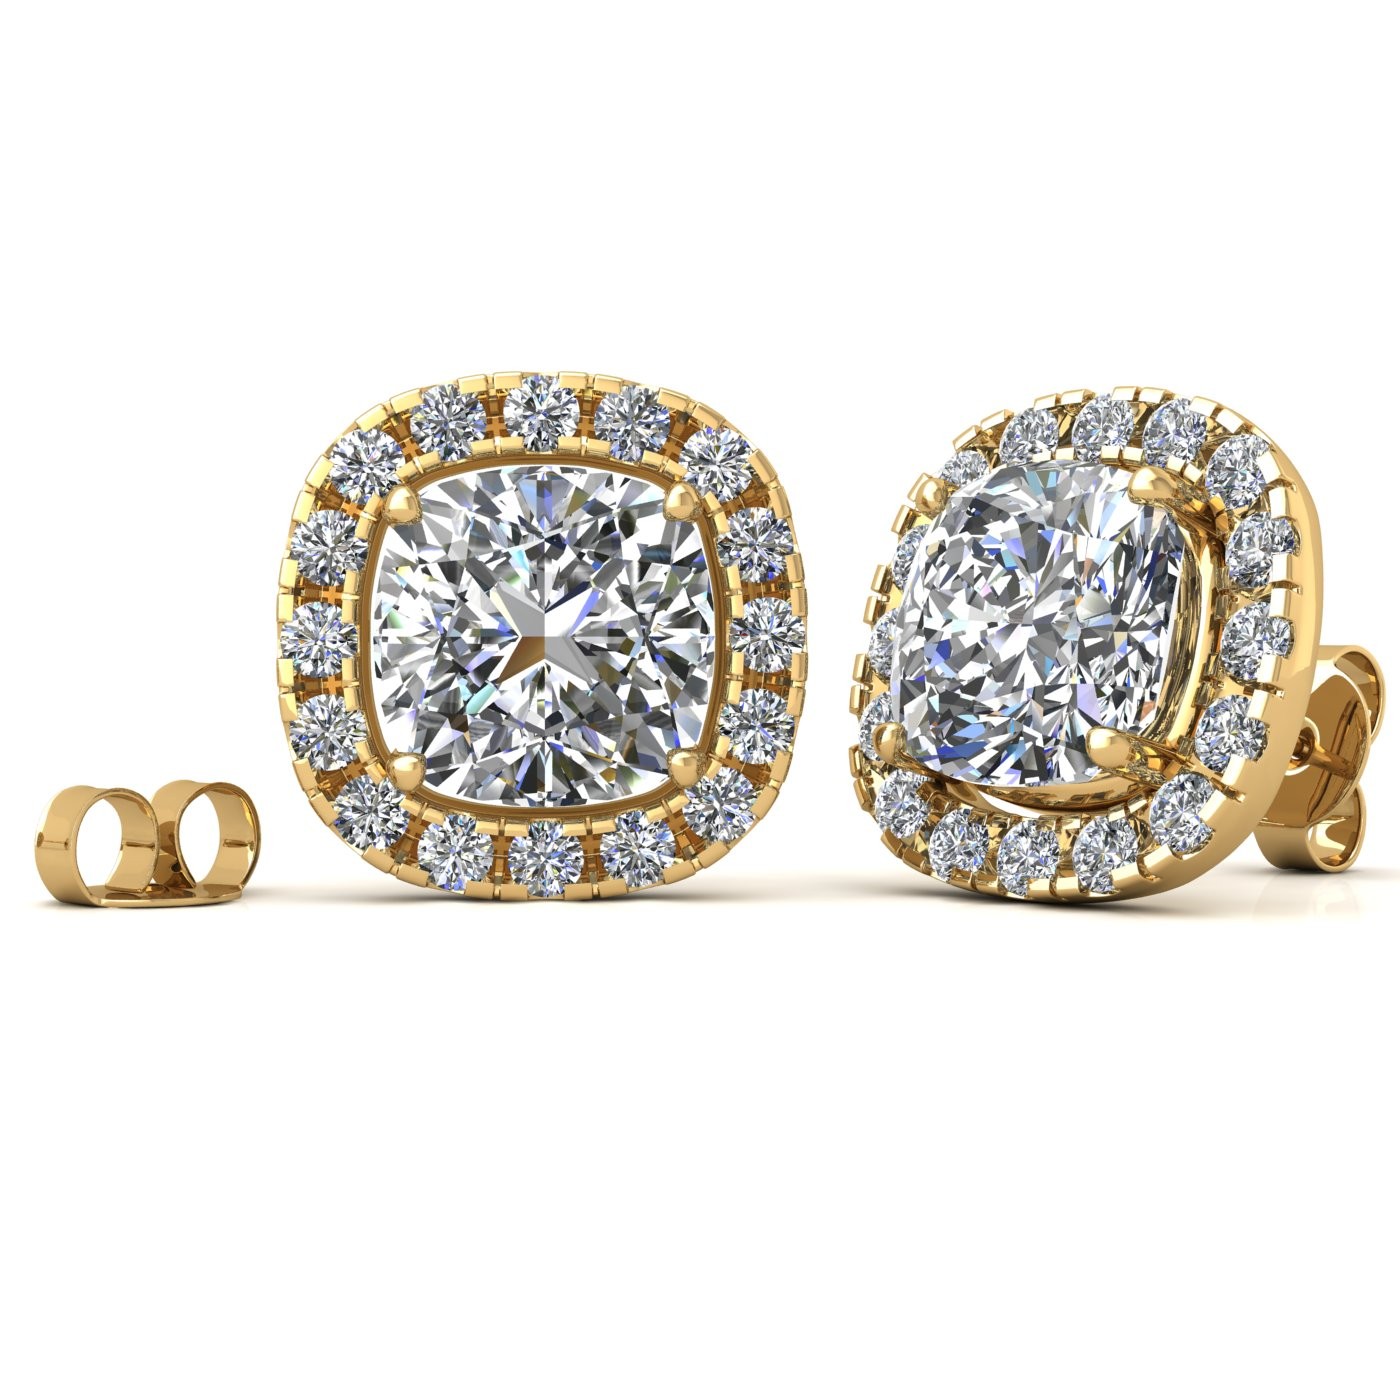 18k yellow gold  2,0 ct each (4,0 tcw) 4 prongs cushion shape diamond earrings with diamond pavÉ set halo Photos & images